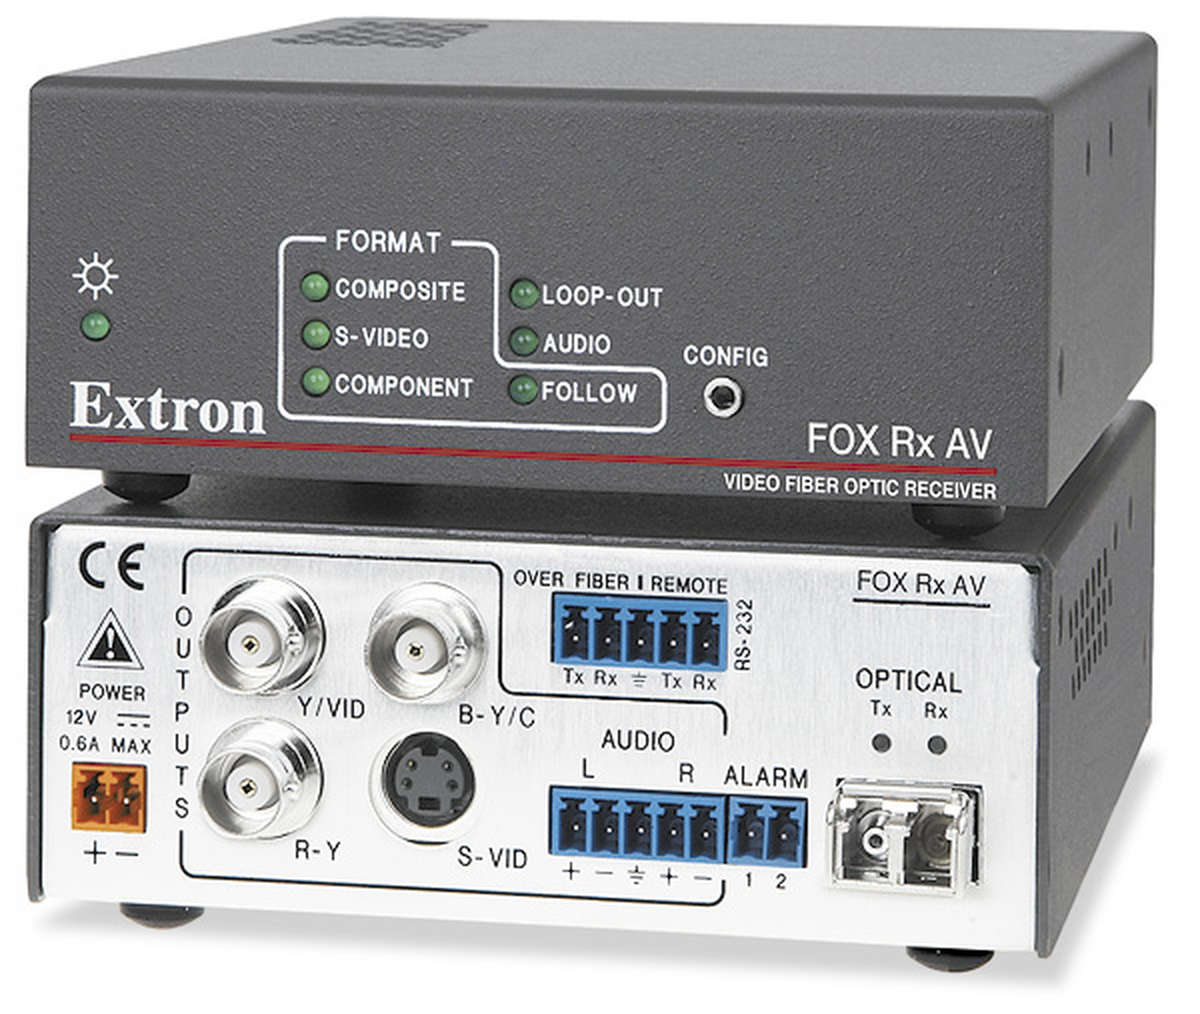 Extron FOX Rx AV MM 60-941-21  product image